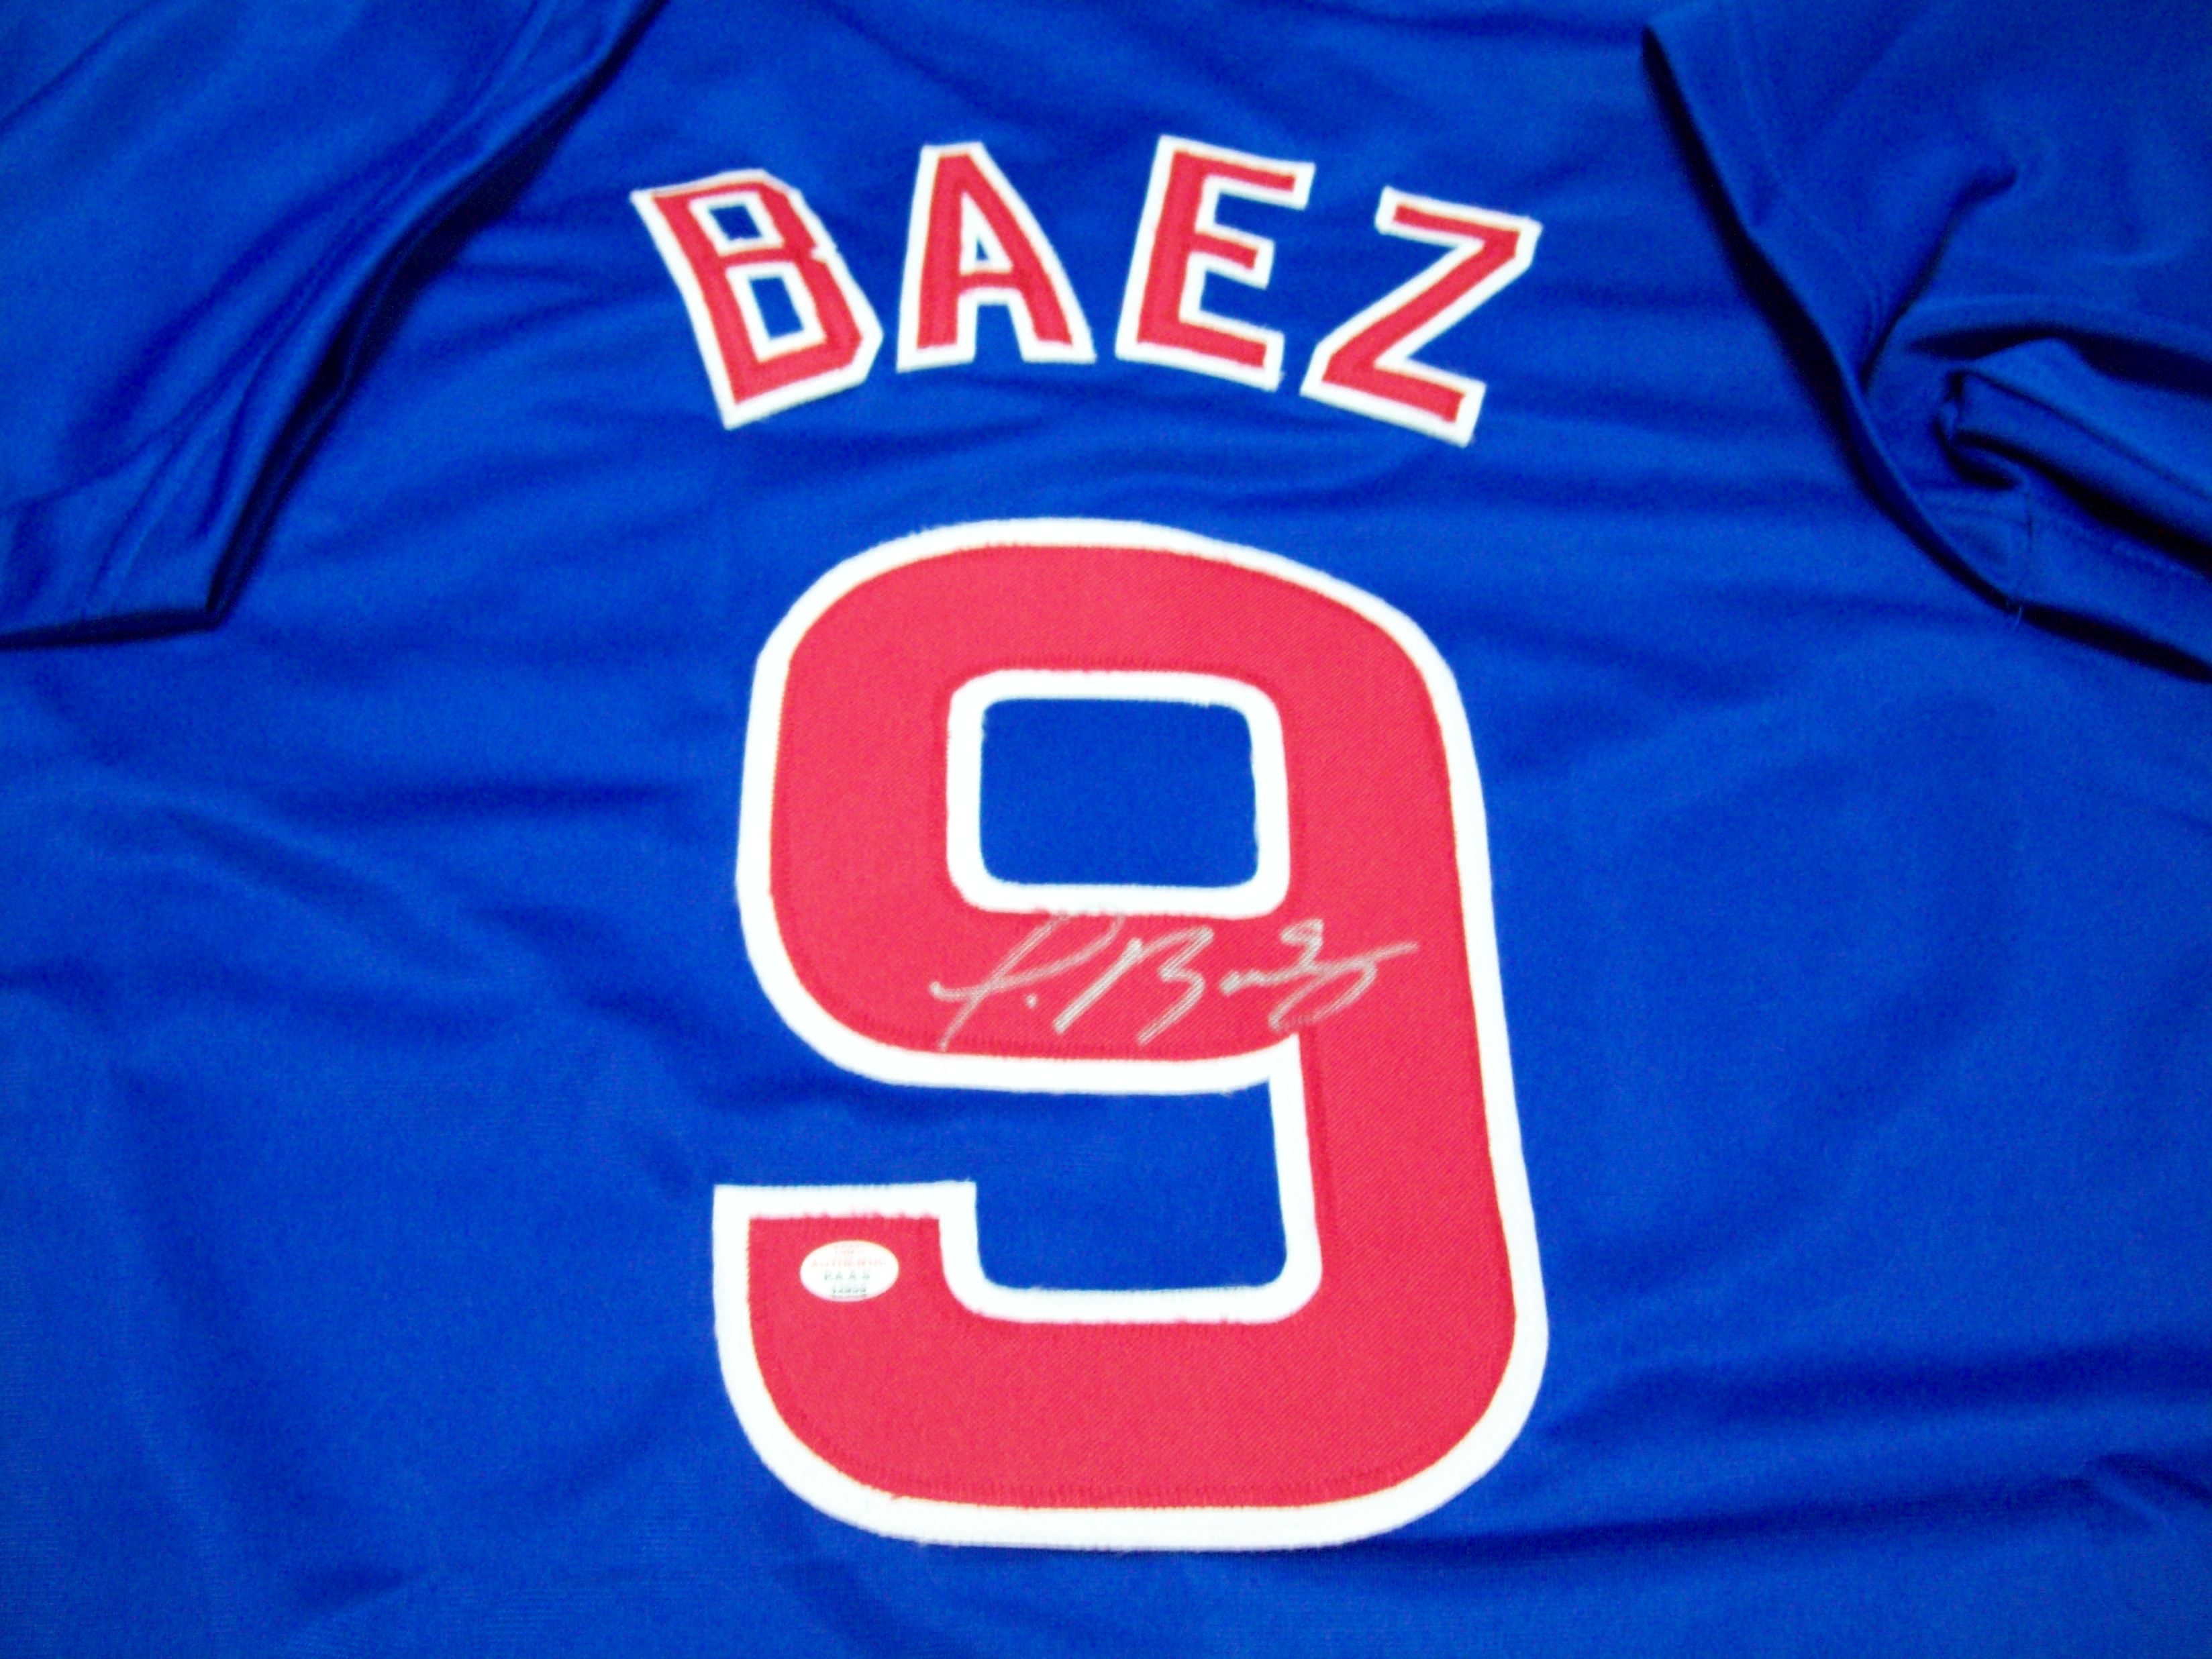 Javier Baez Autographed Baseball